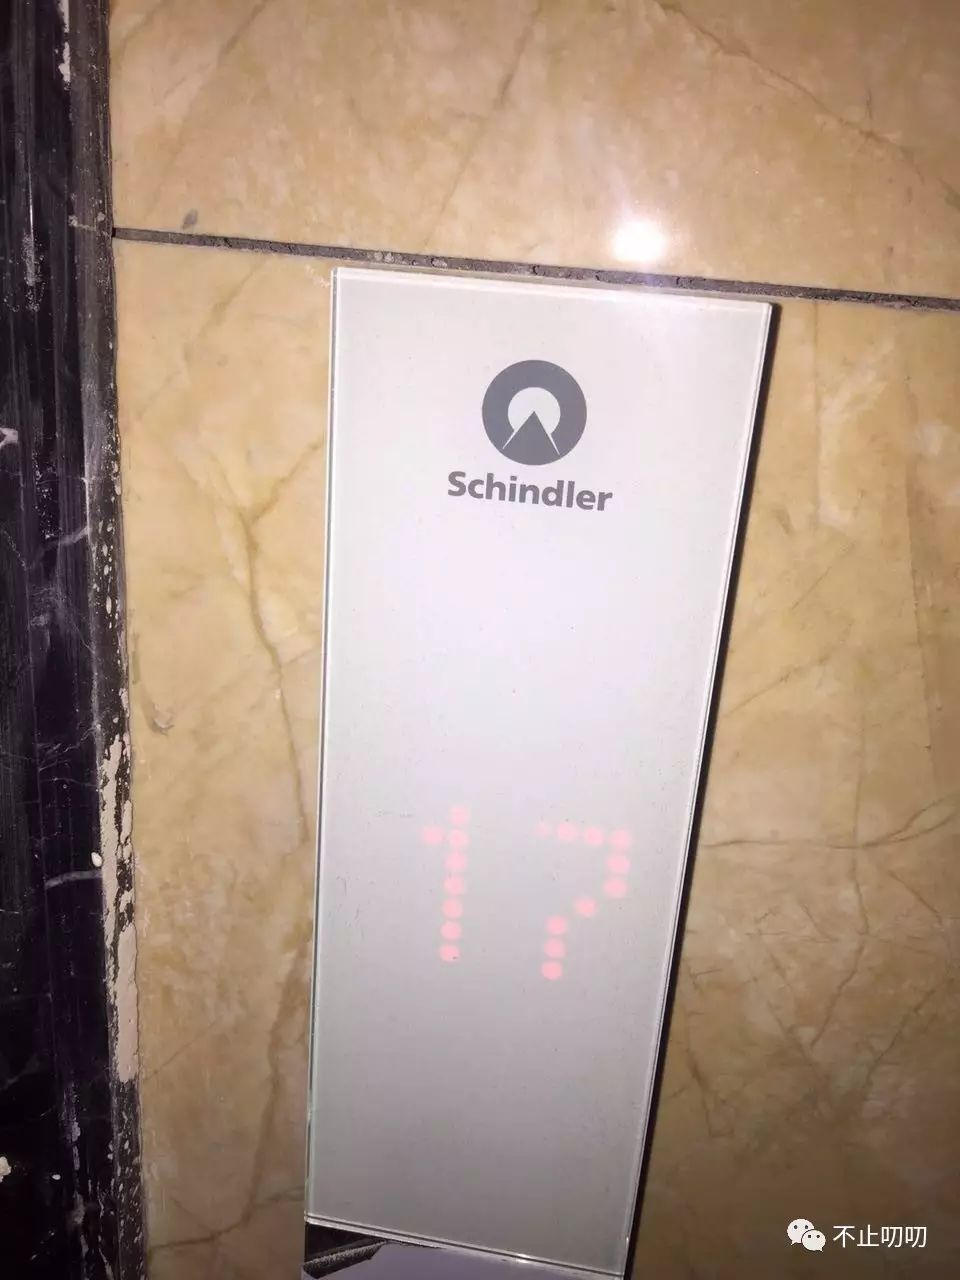 电梯:迅达(schindler)